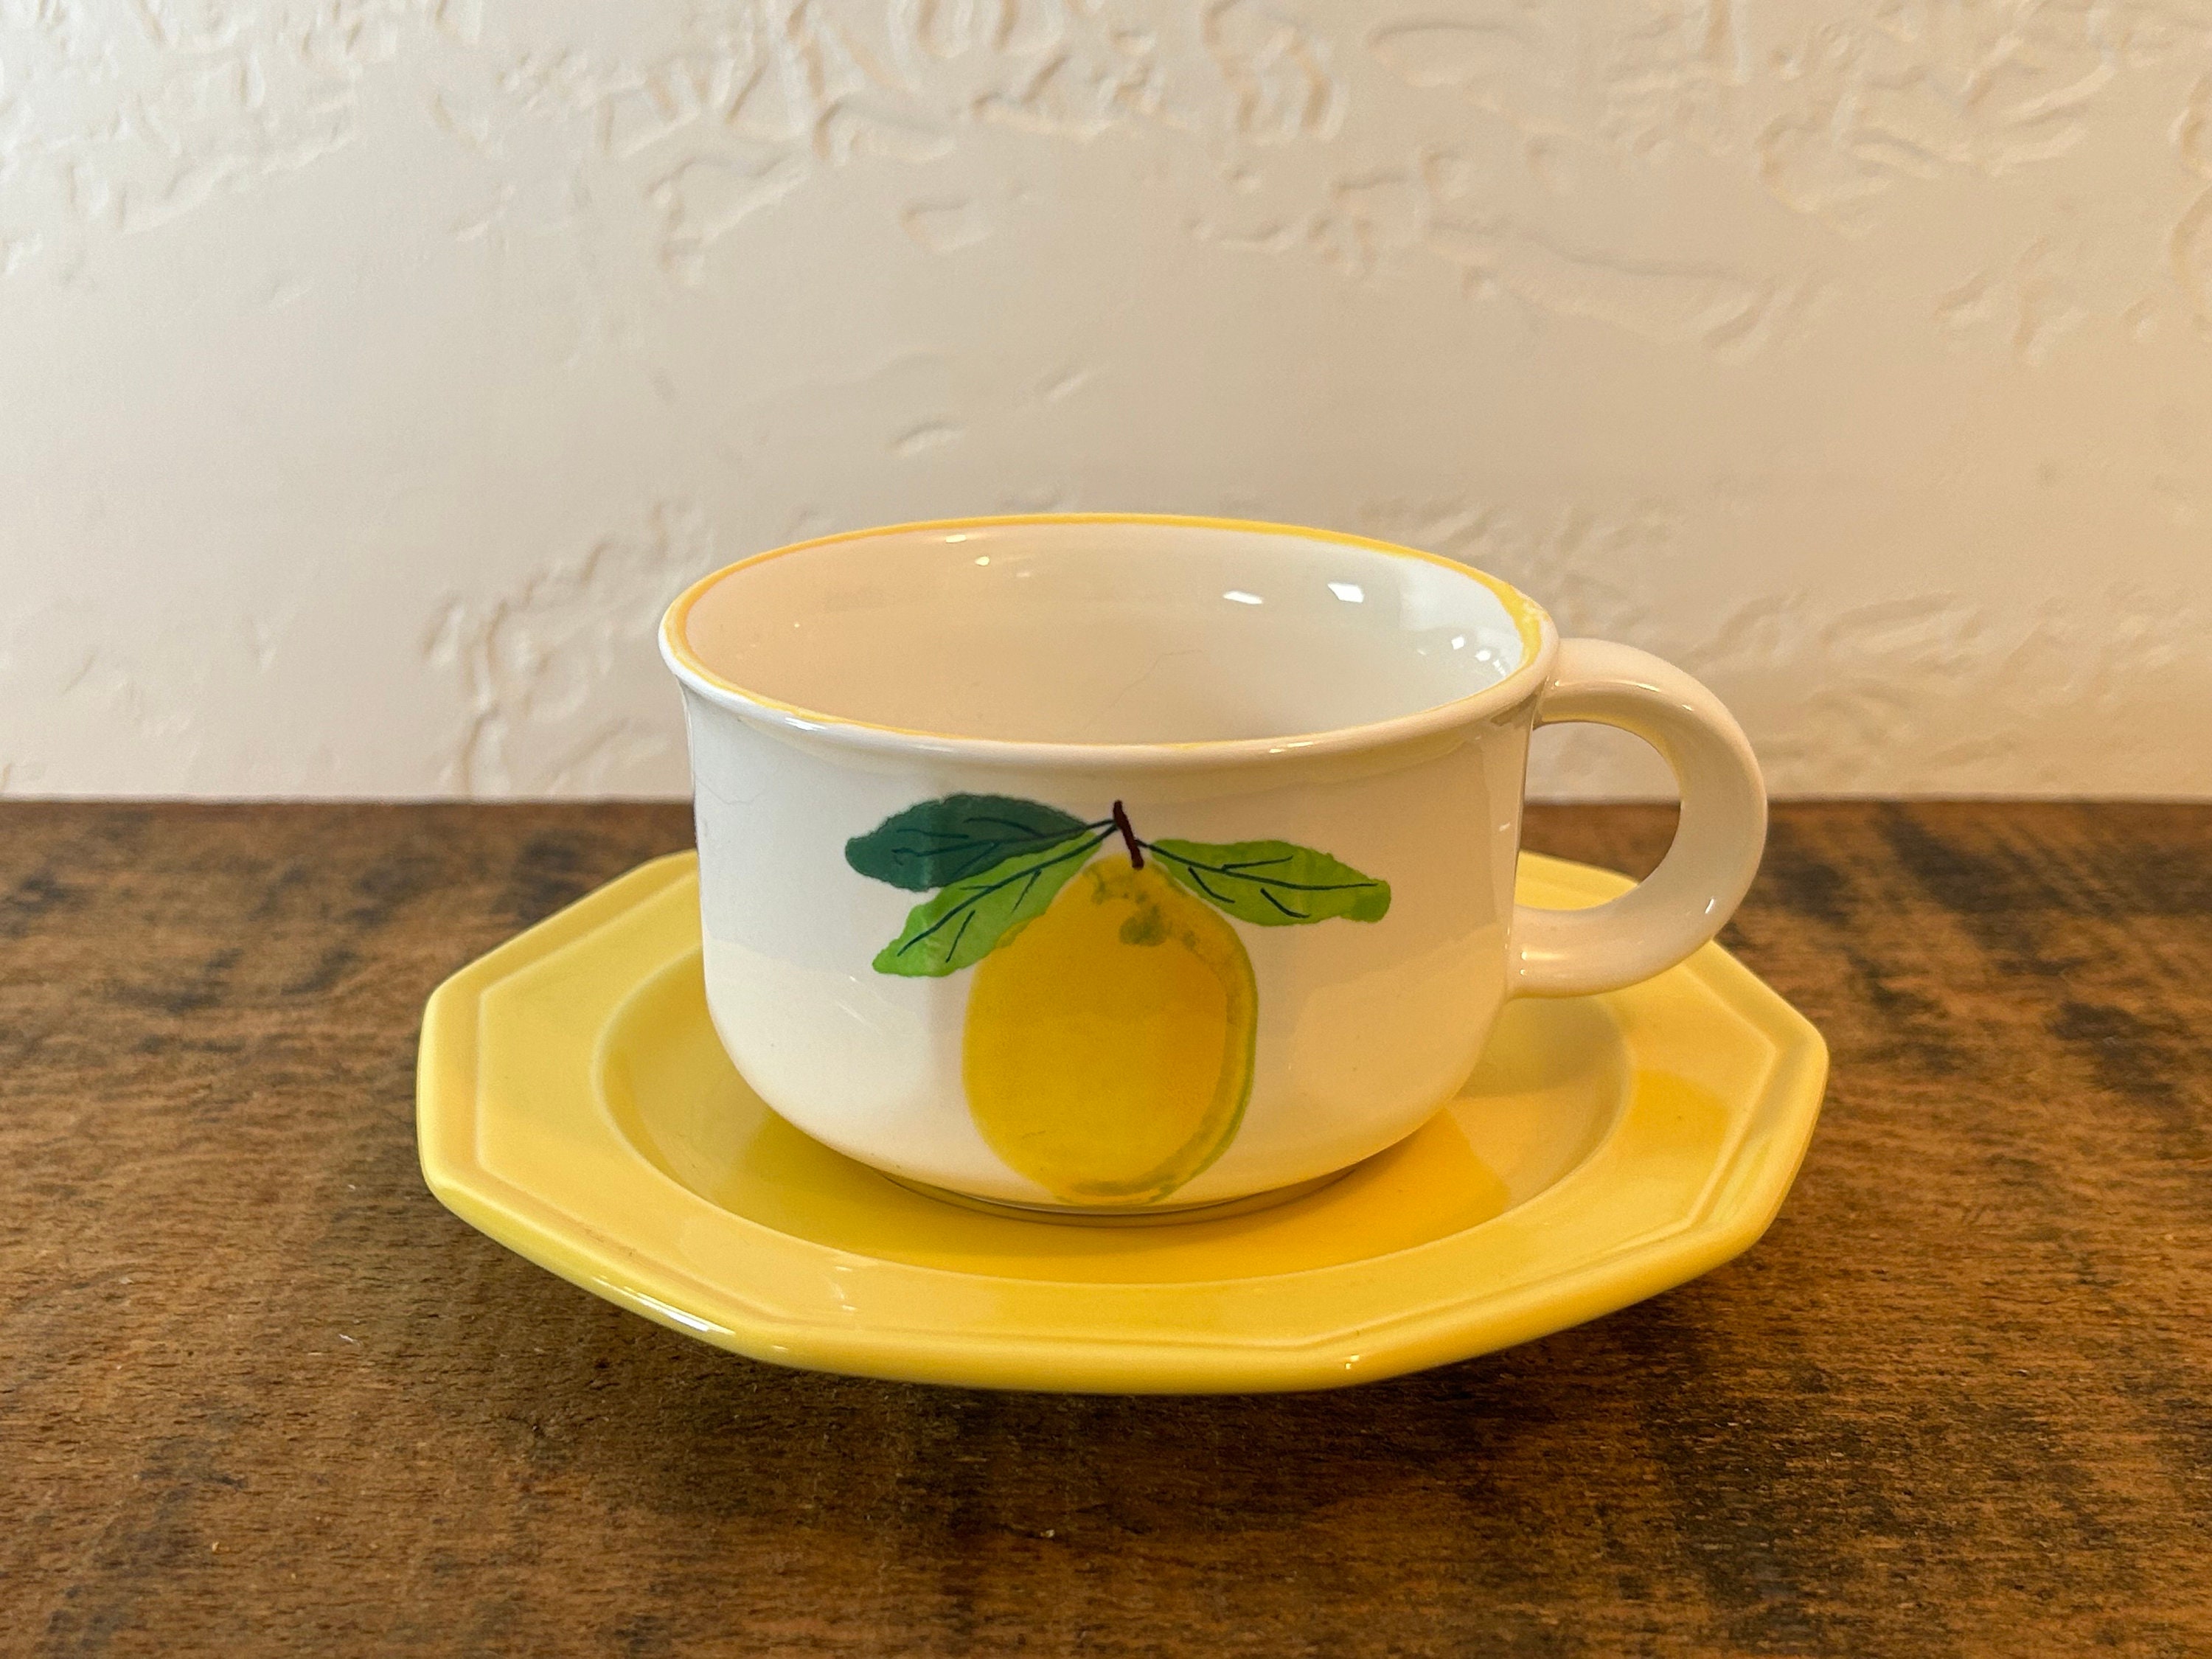 Set 4 Espresso Cup & Saucer Lemon